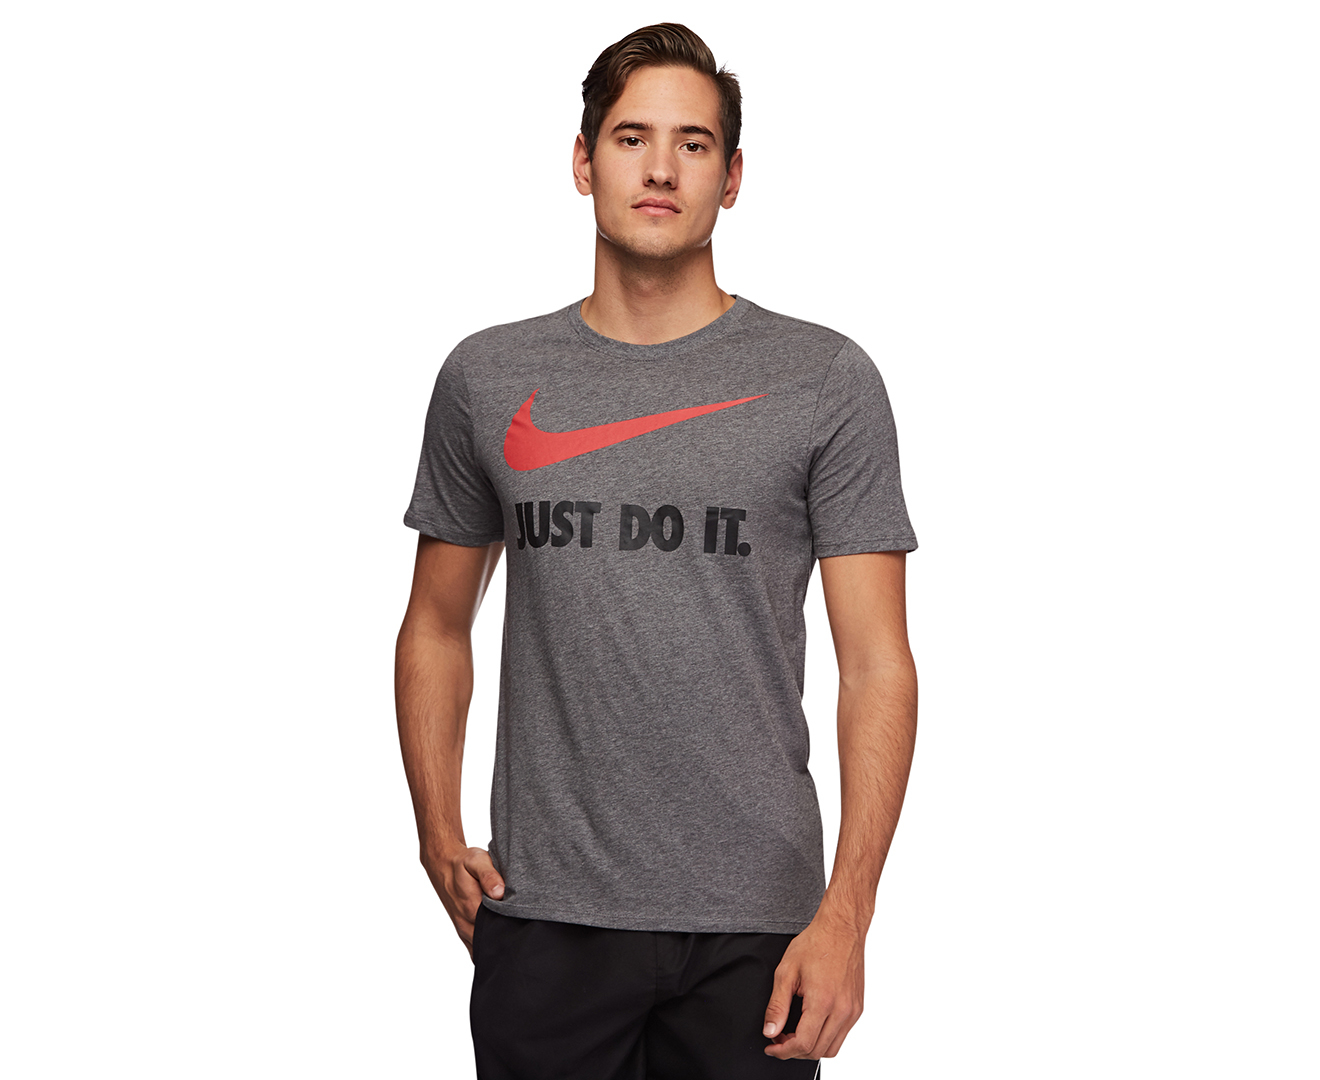 Nike Men's Just Do It Swoosh Tee - Charcoal Heather | Www.catch.com.au